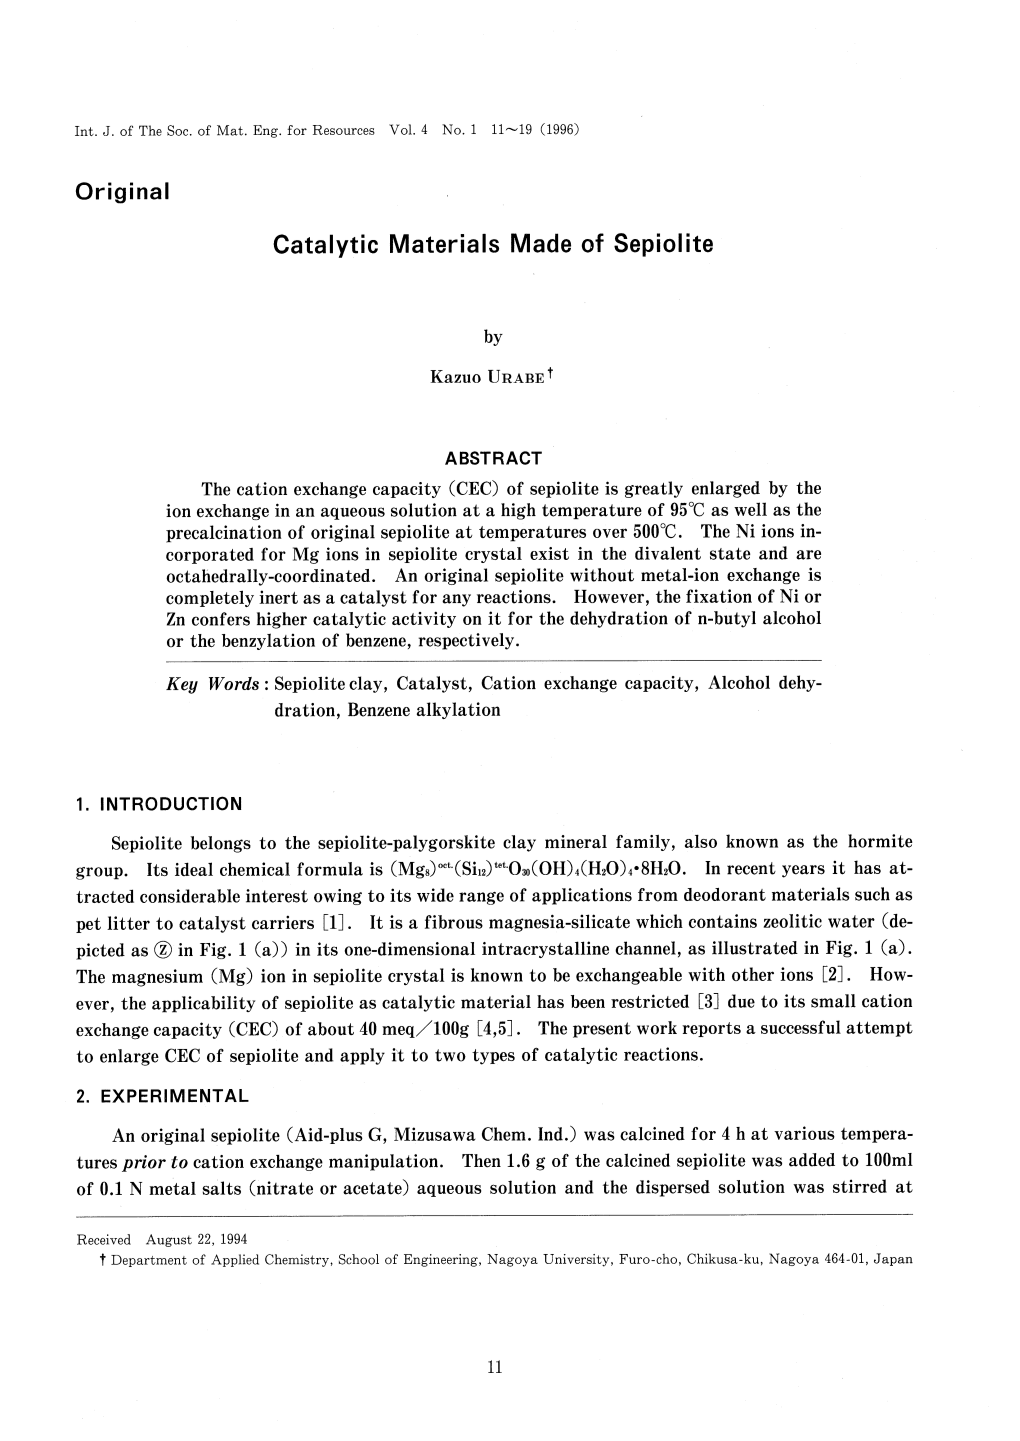 Catalytic Materials Made of Sepiolite